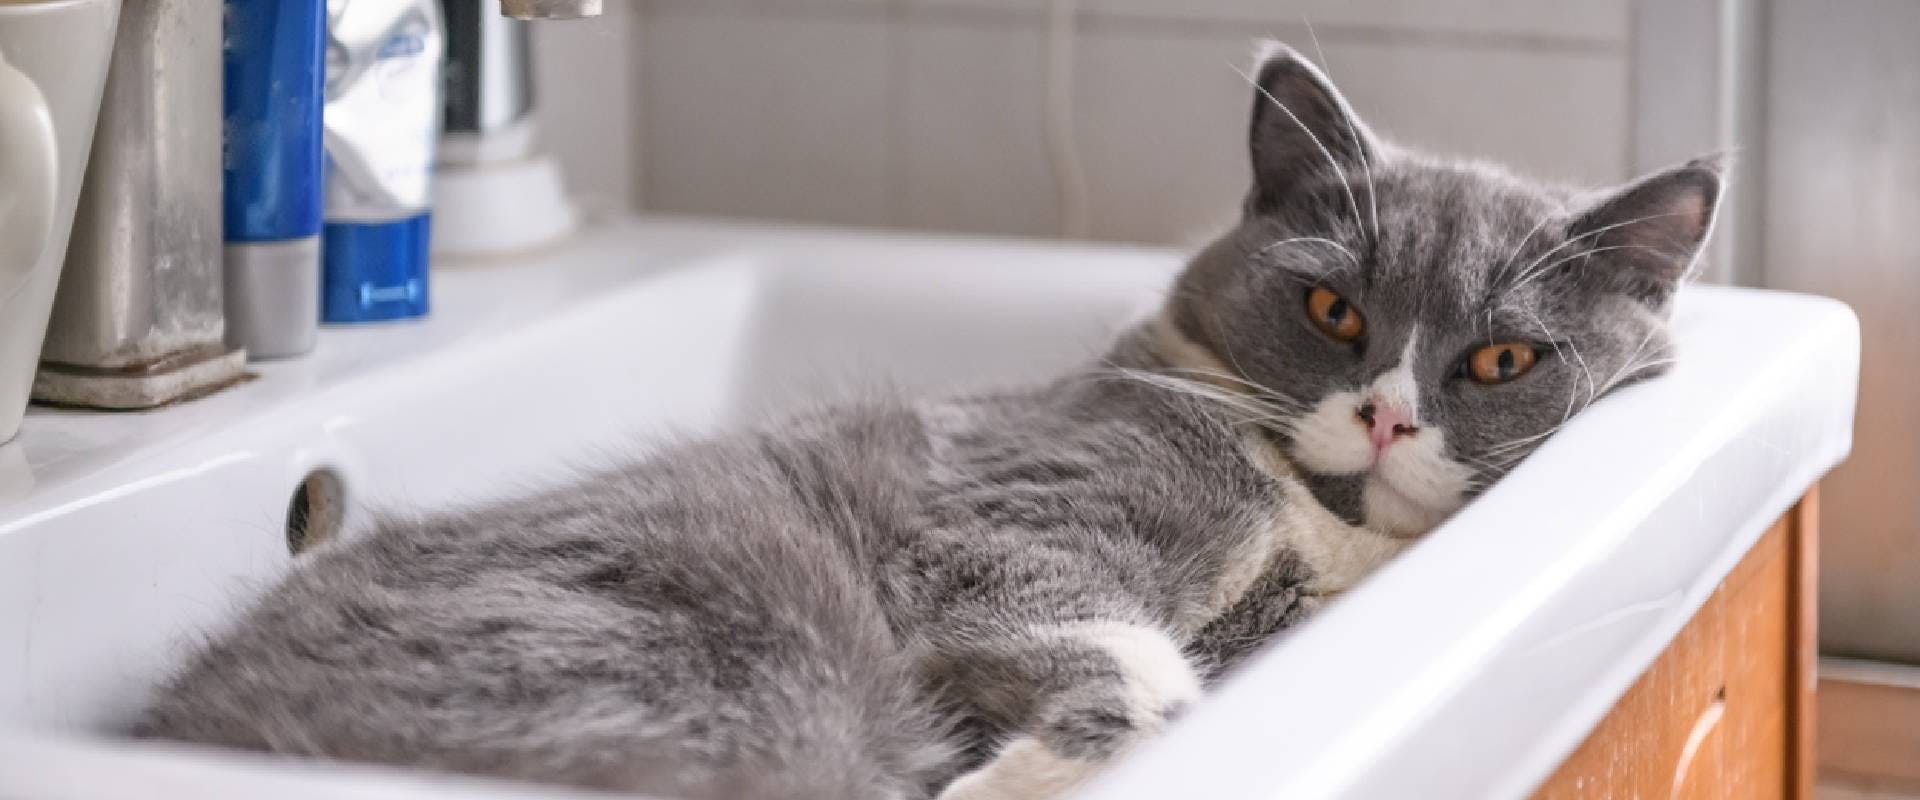 Cat in a bathroom sink